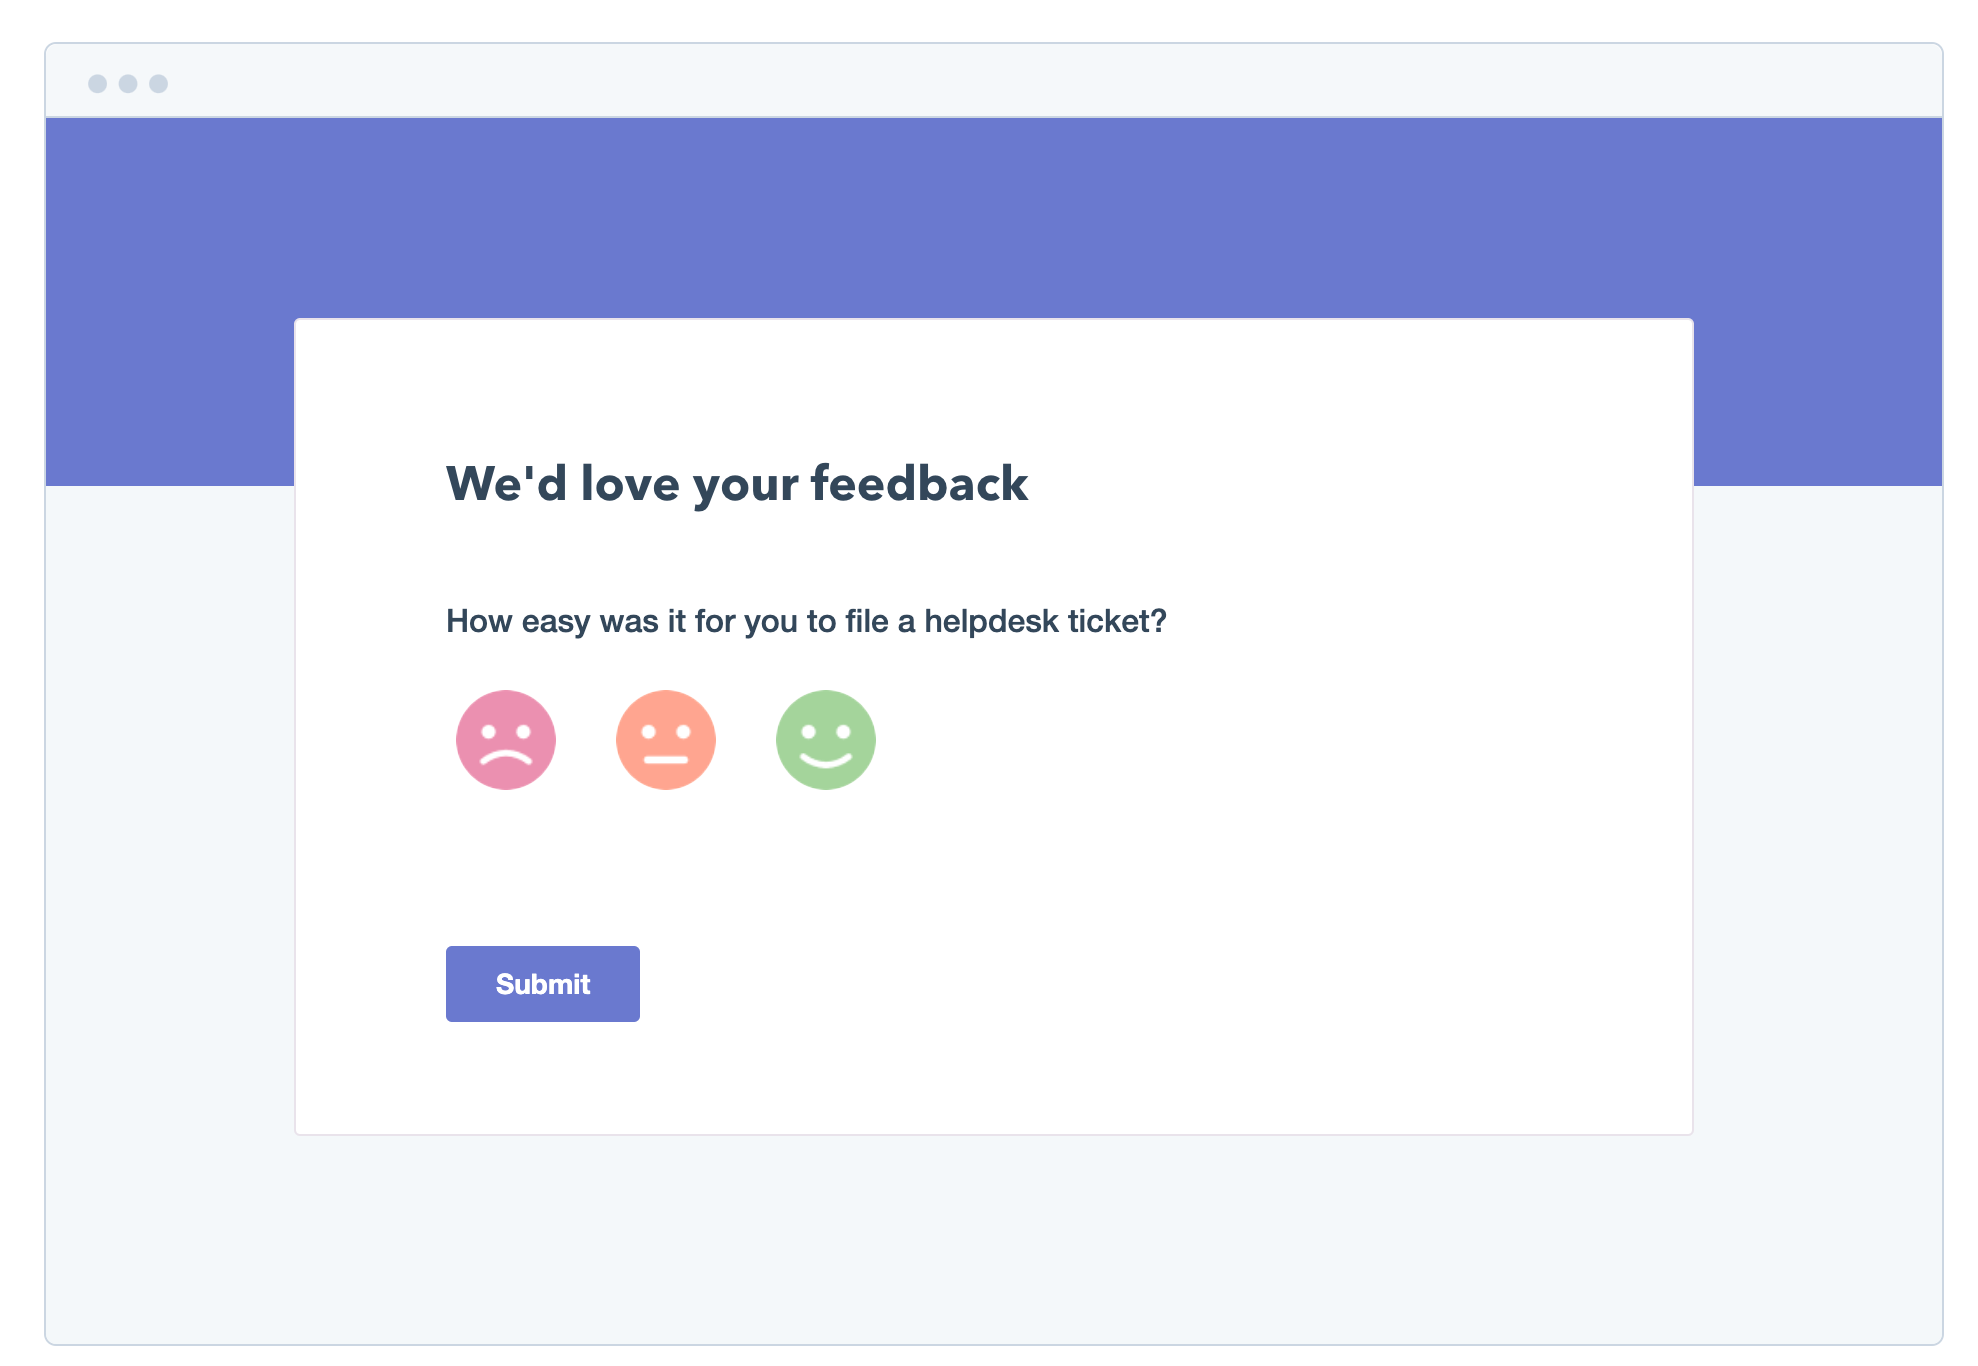 sample customer effort score survey using emoticon rating scale